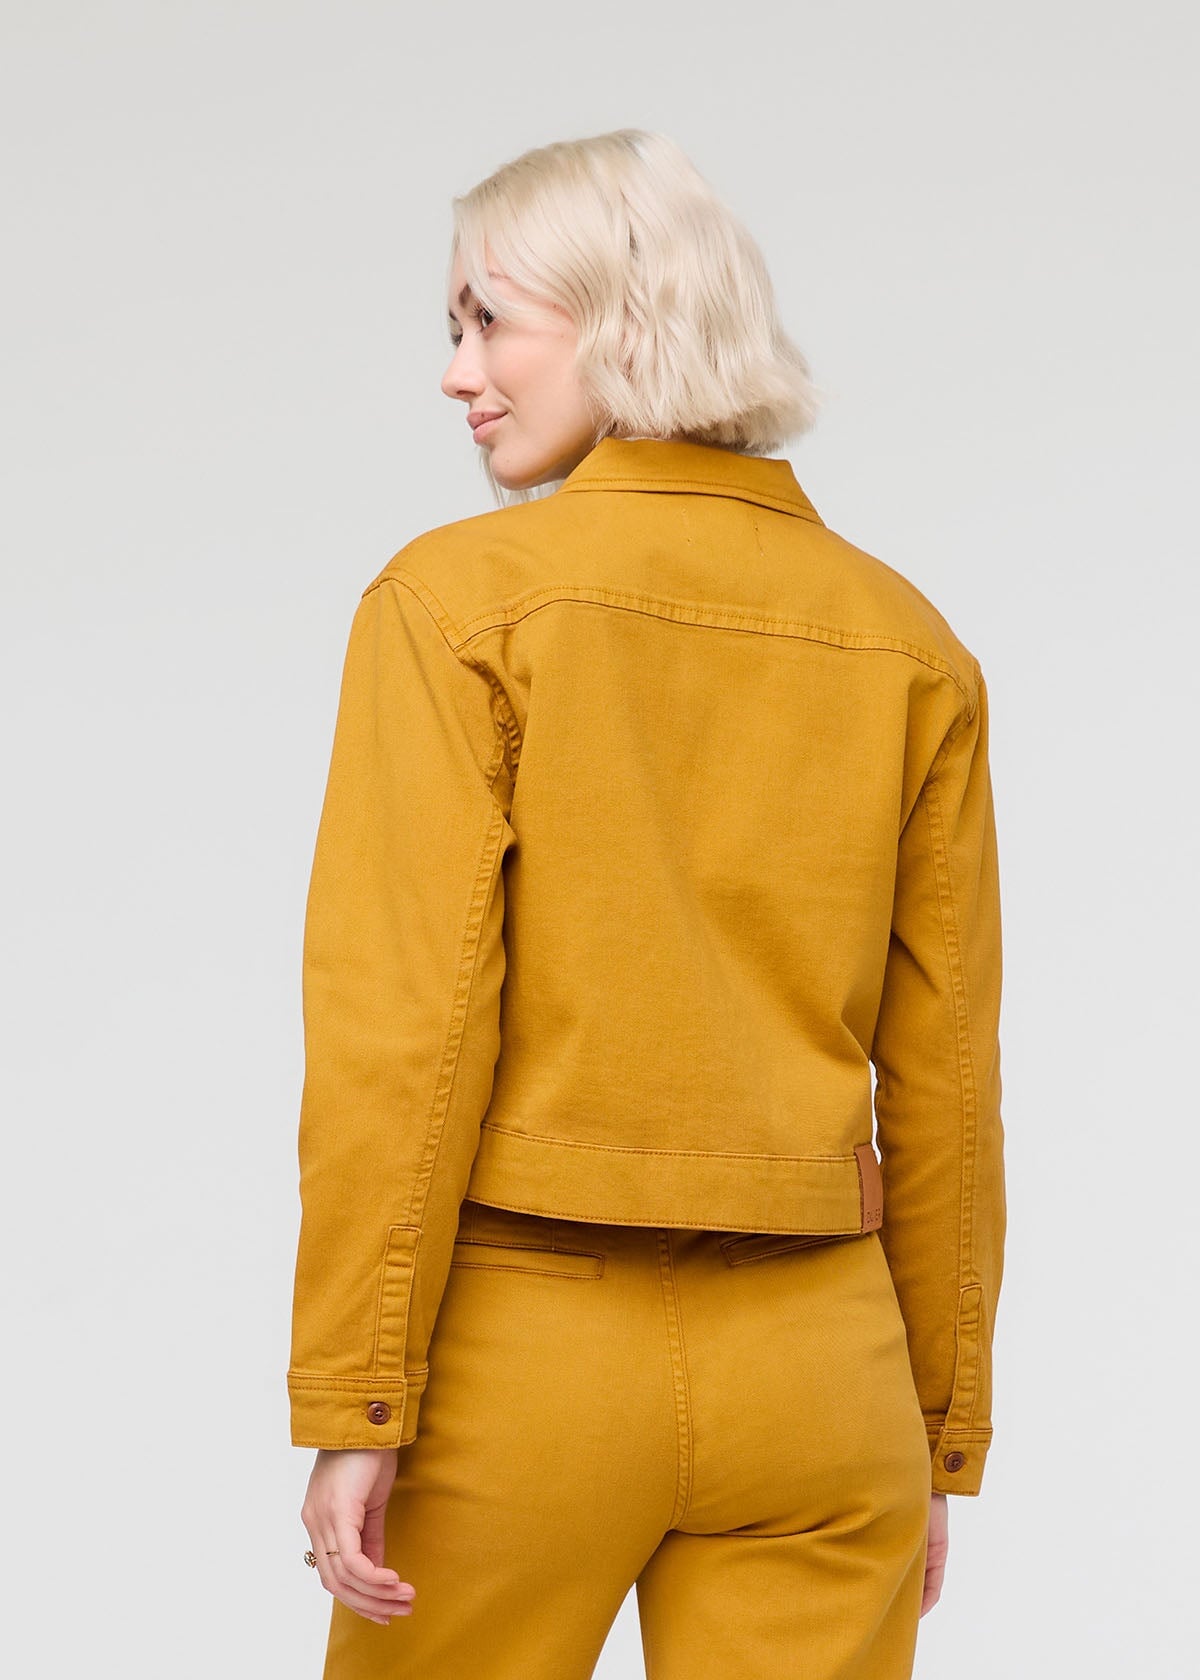 Front Pocket Corduroy Jacket | Denim jacket outfit, Jacket outfits, Denim  jacket women